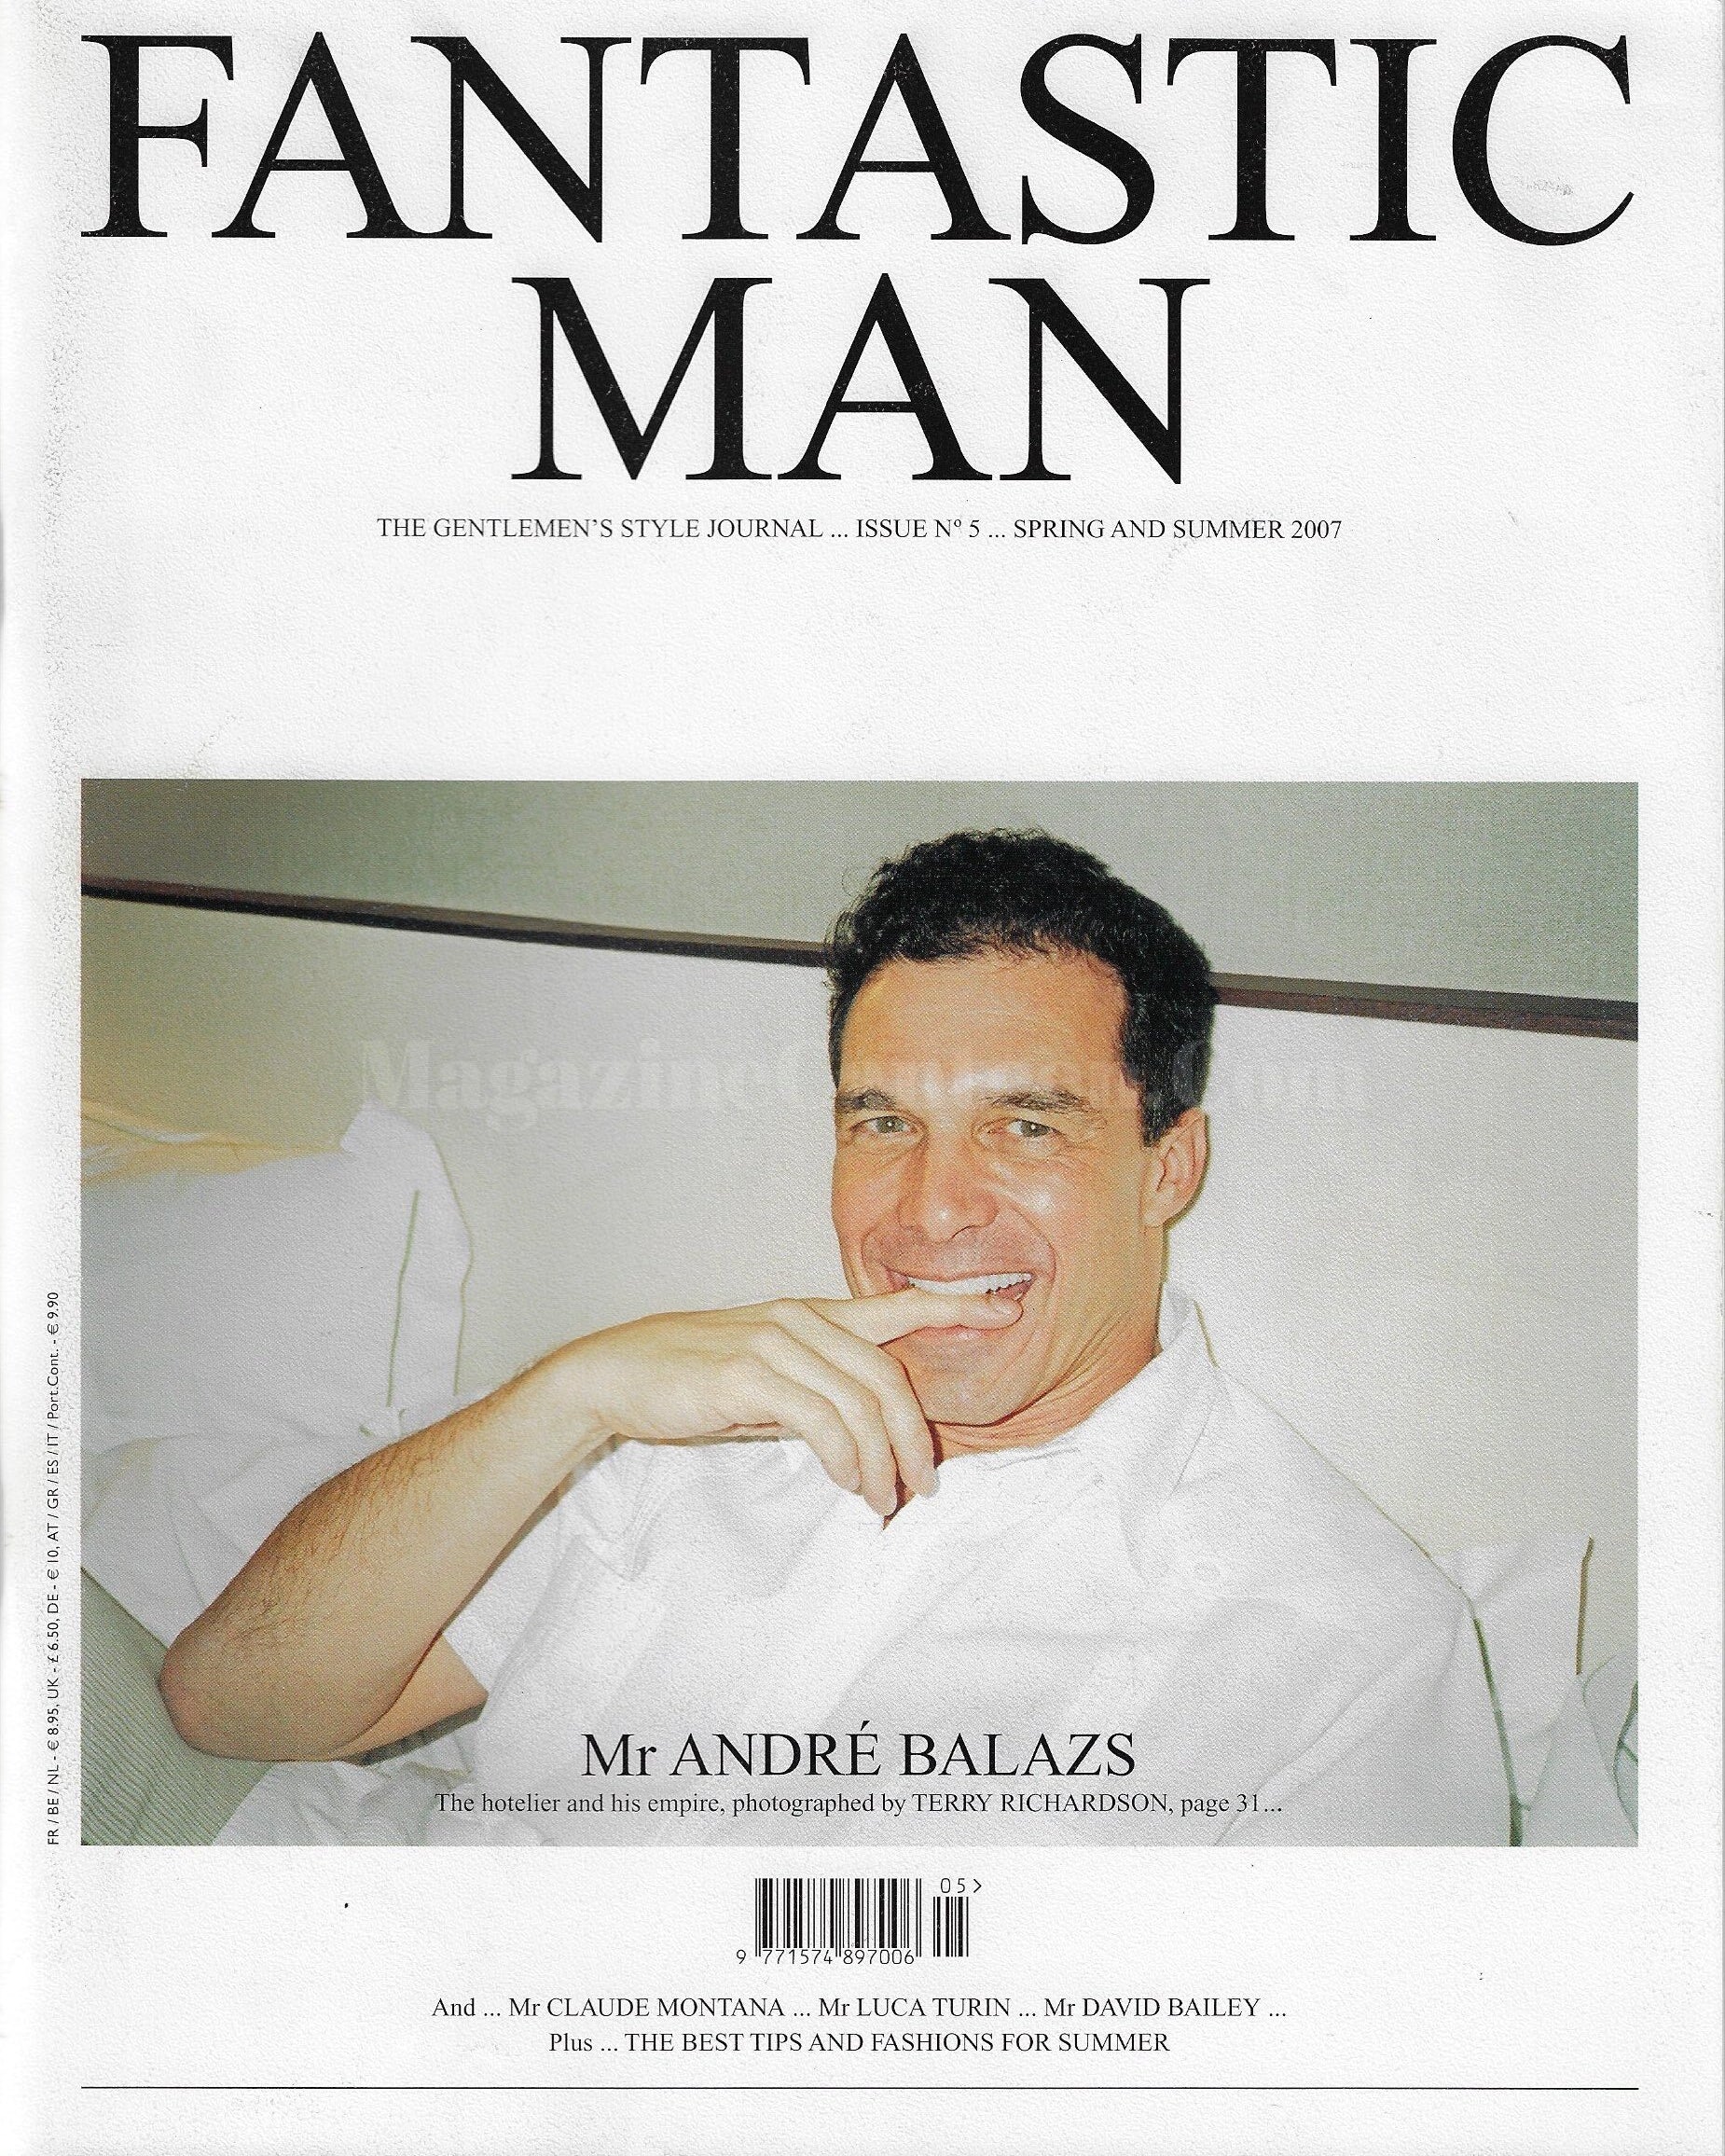 Fantastic Man Magazine 5 - Andre Balazs